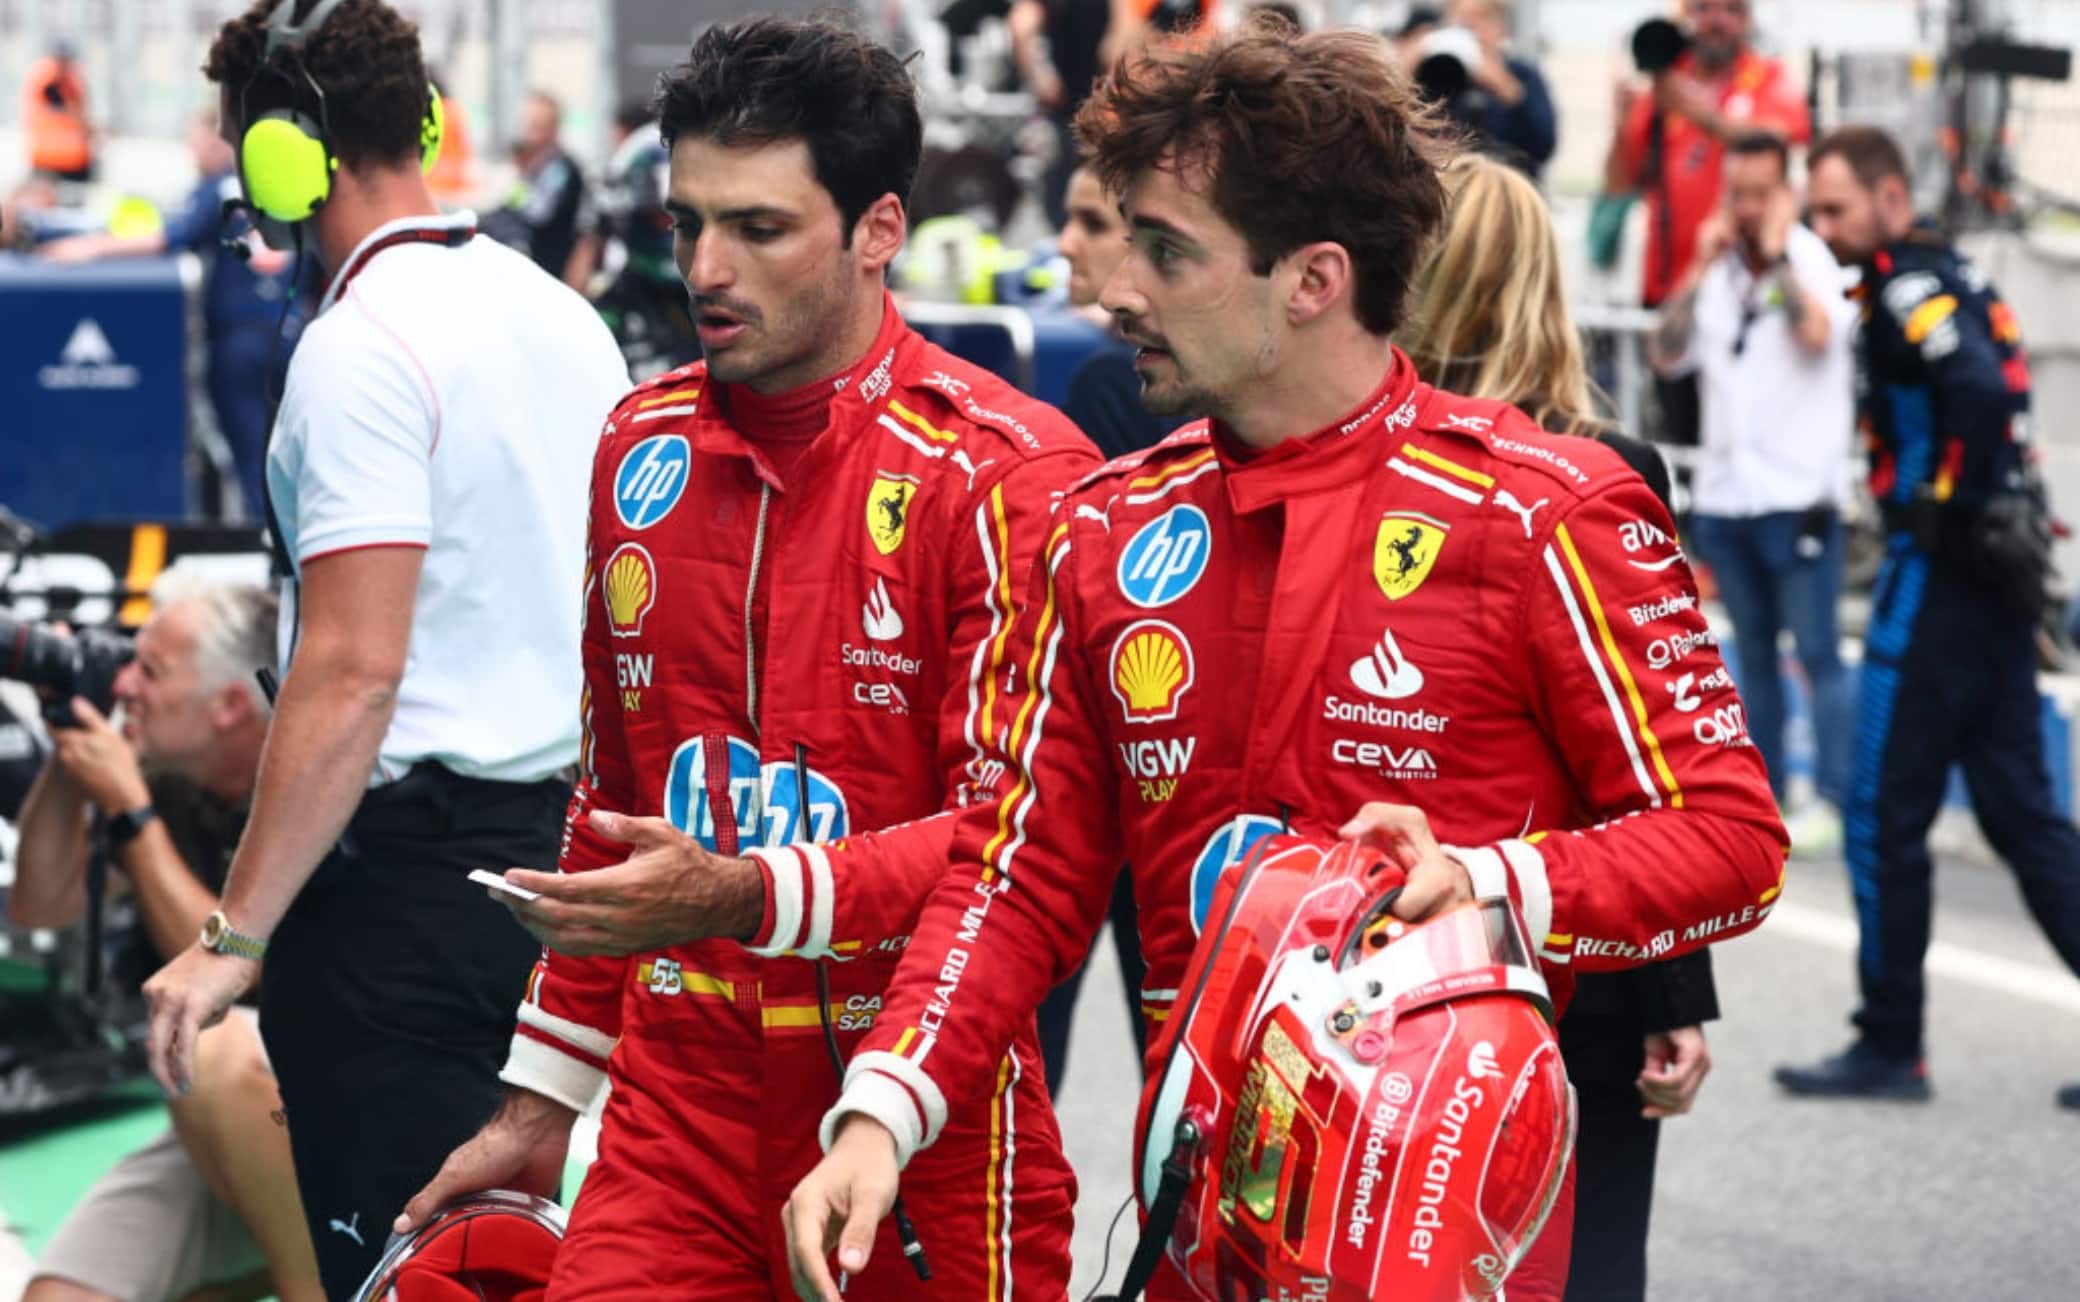 F1, GP Spagna, Leclerc Sainz Ferrari